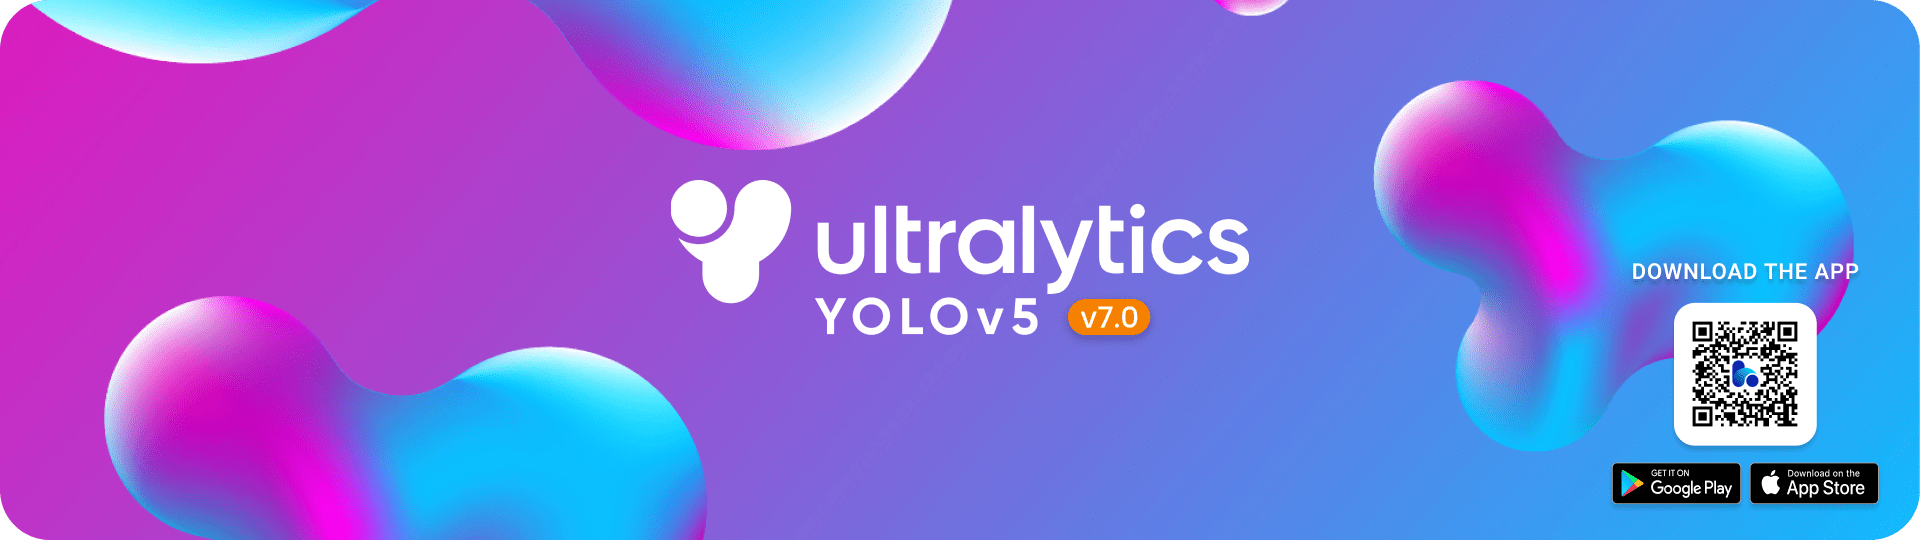 Ultralytics YOLOv5 баннер v7.0